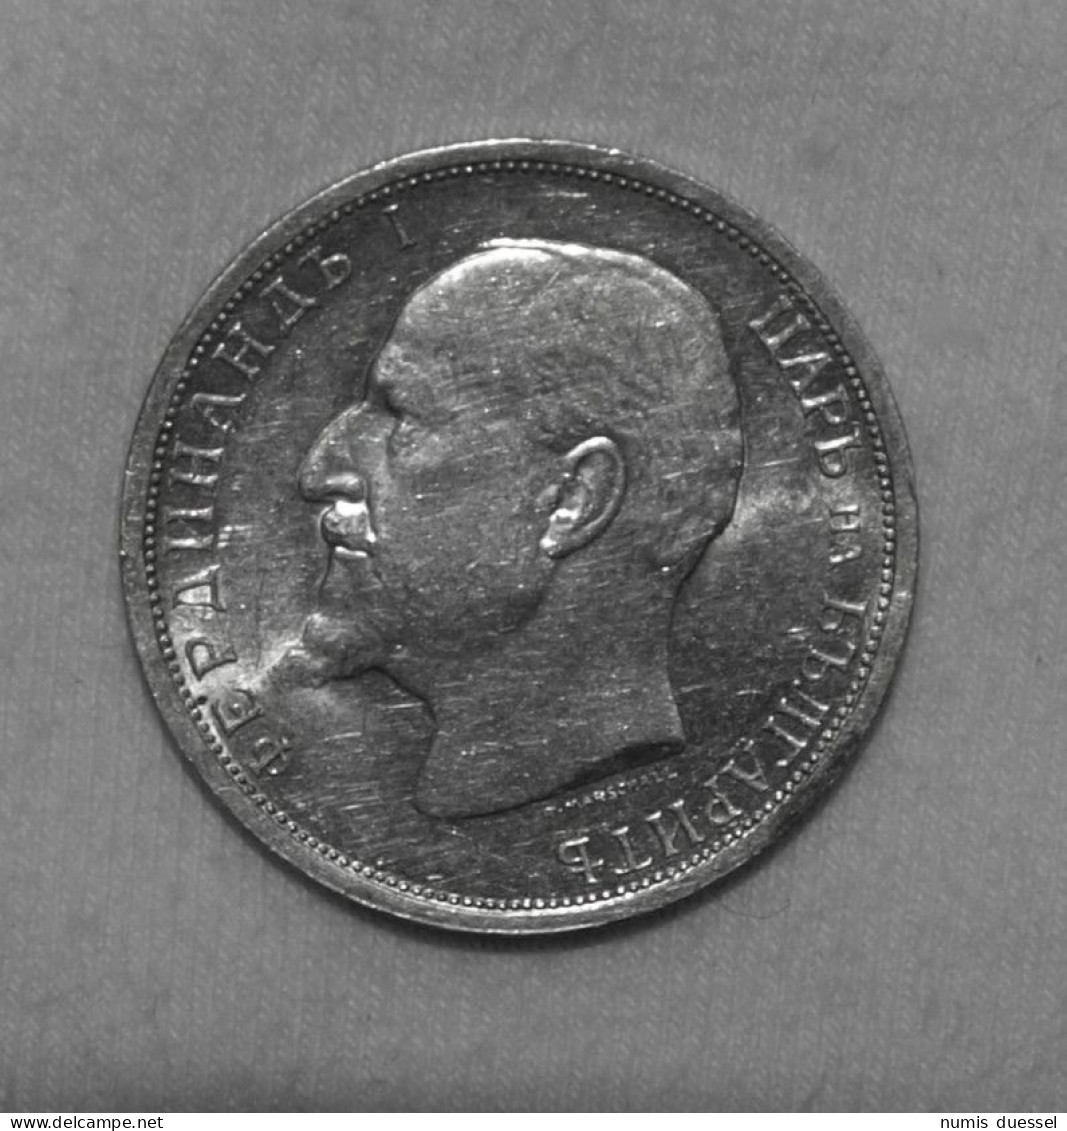 Silber/Silver Bulgarien/Bulgaria Ferdinand I, 1913, 1 Lewa UNC - Bulgarie